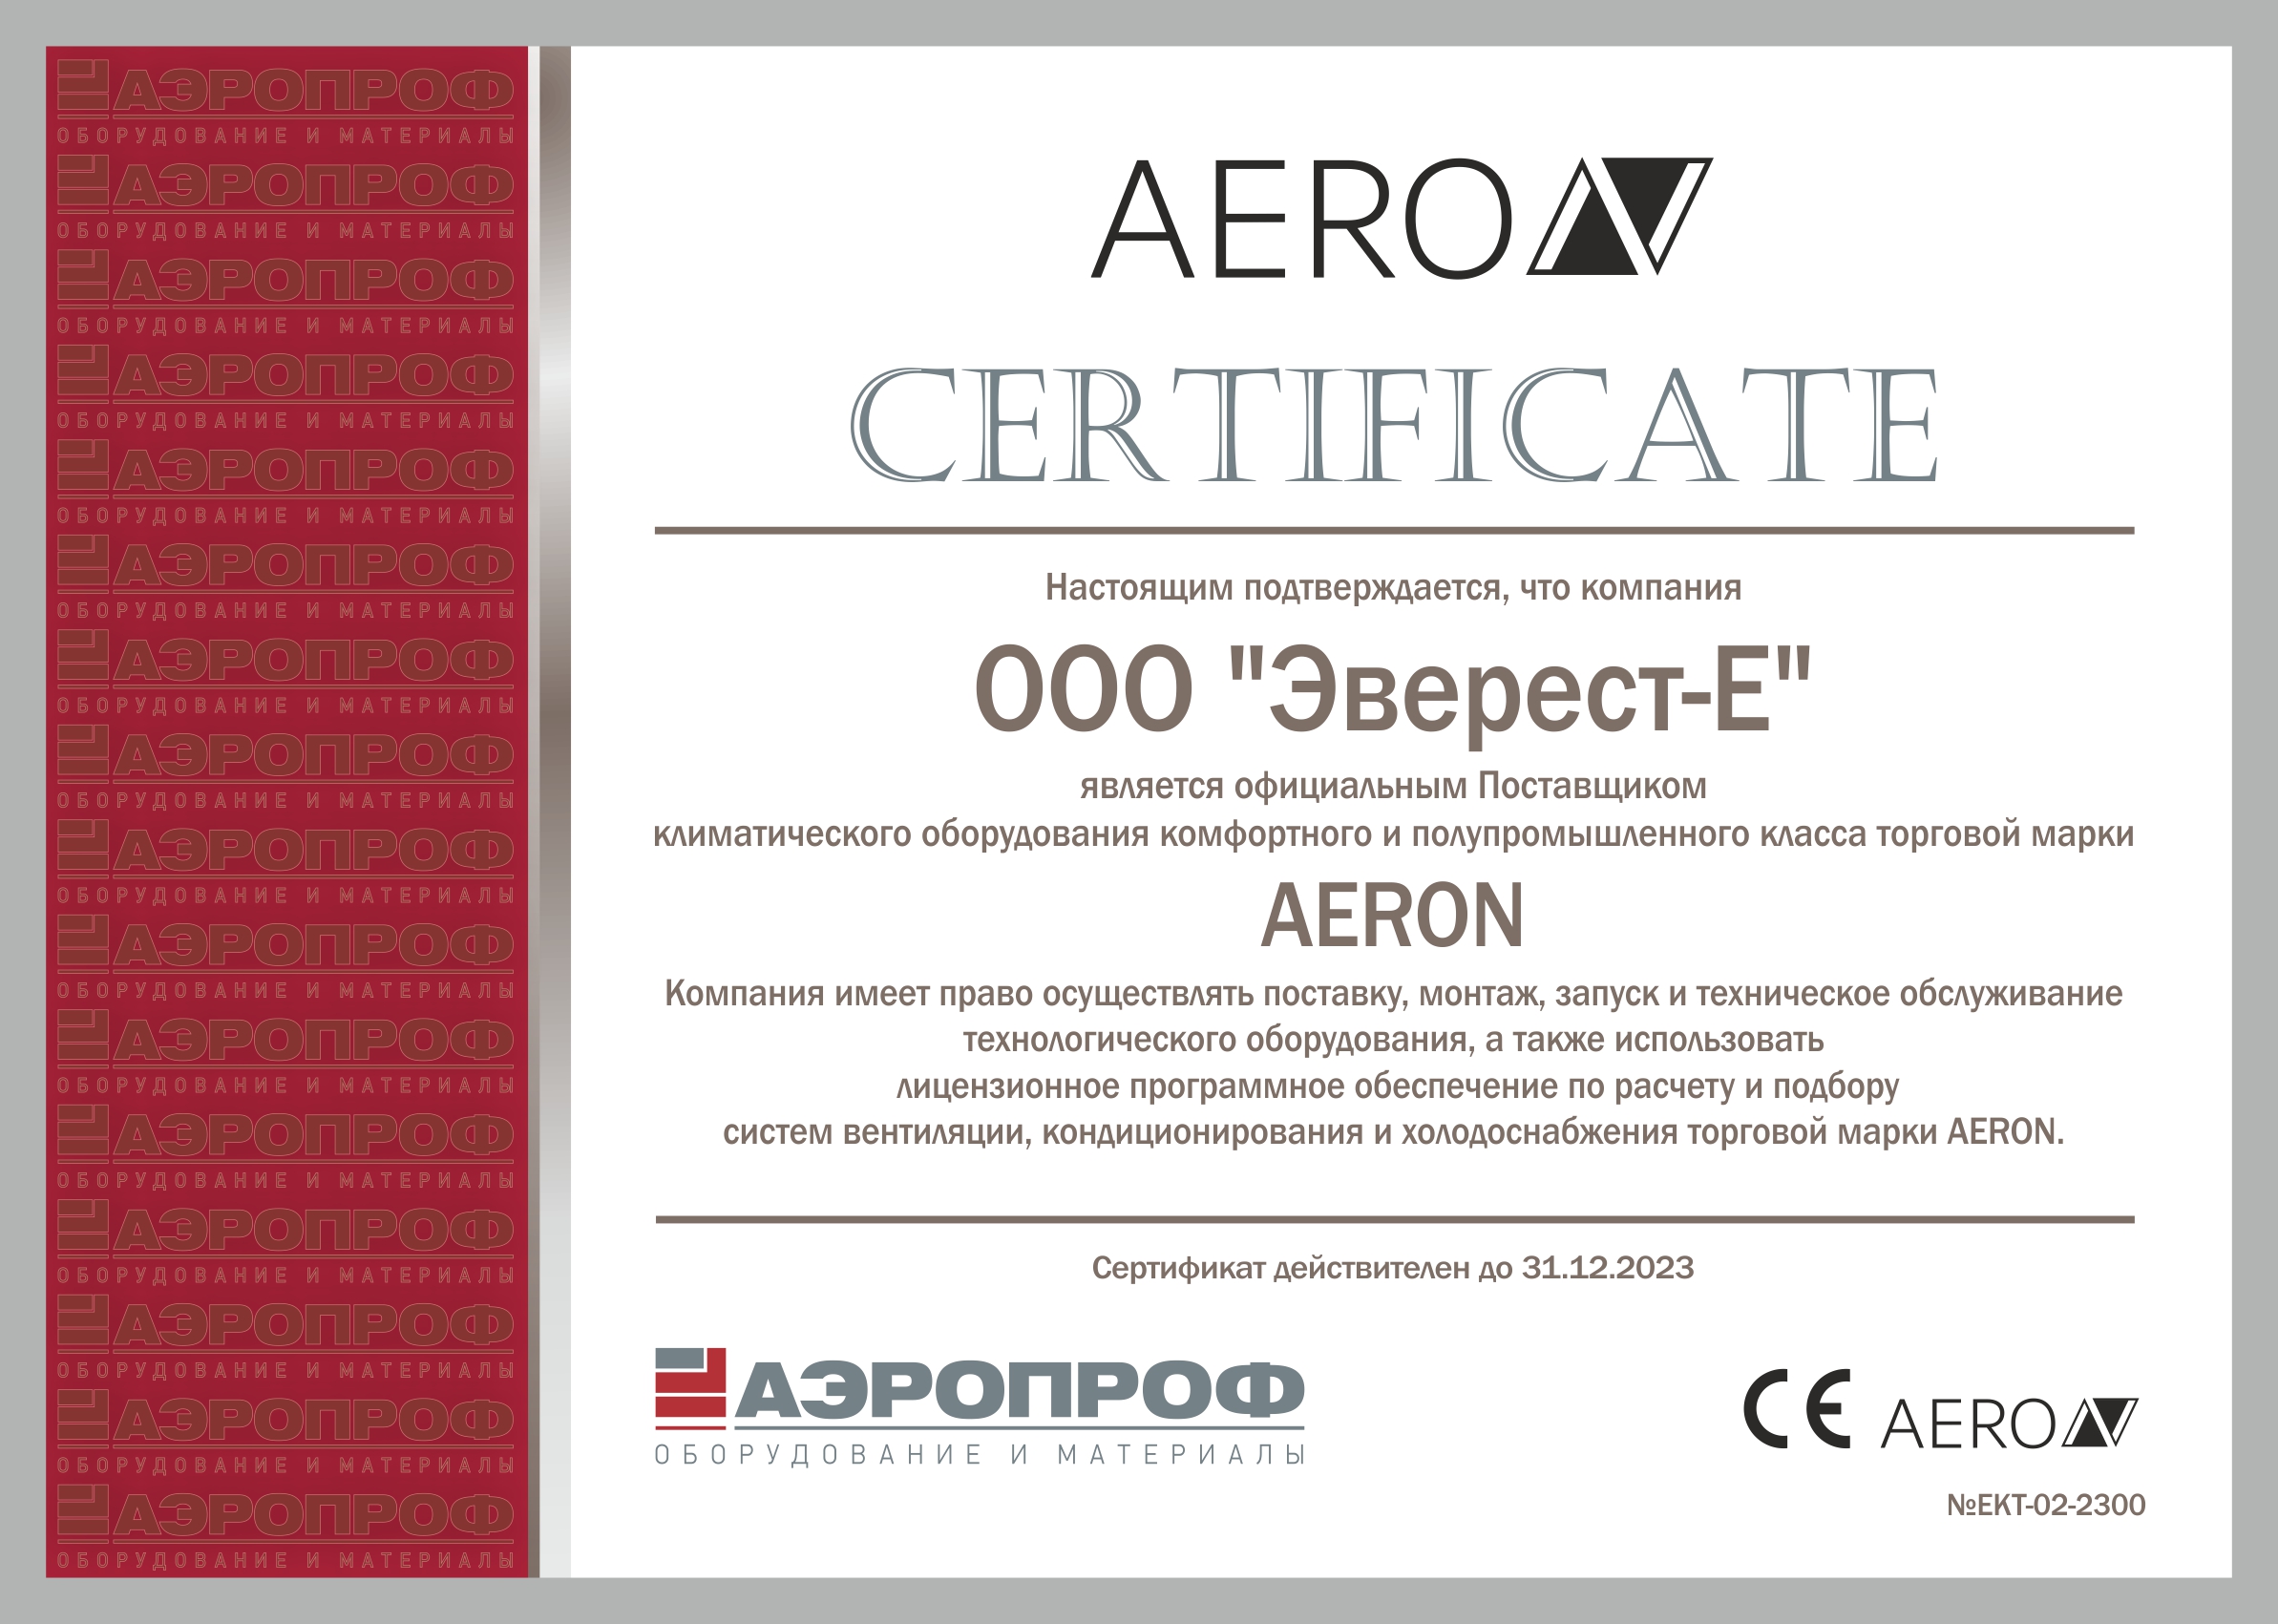 sert23-everest-aeron Kondicioner Aero ALRS-36IH3A-02/ALRS-36OH3A-02 kypit v Ekaterinbyrge v internet-magazine KlimatMarket96.ry Сертификат официального дилера